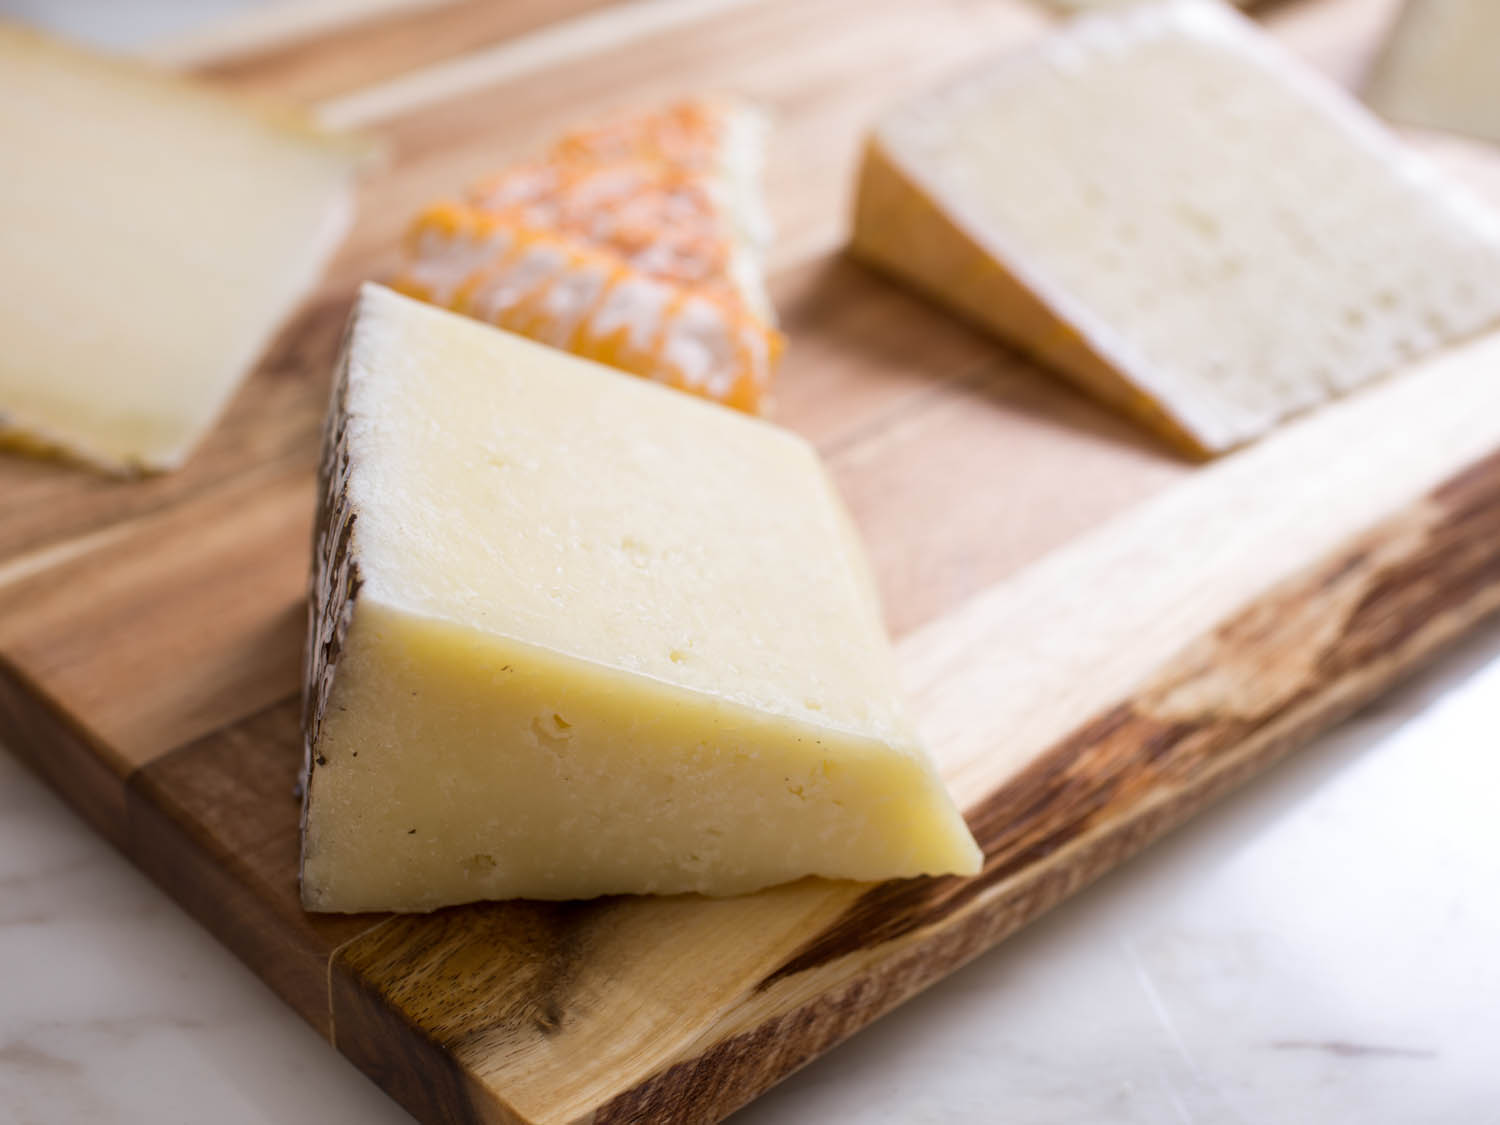 Sheep Milk Cheese Market is Booming Worldwide | Wensleydale Creamery, Nordic Creamery, Valbreso Cheese